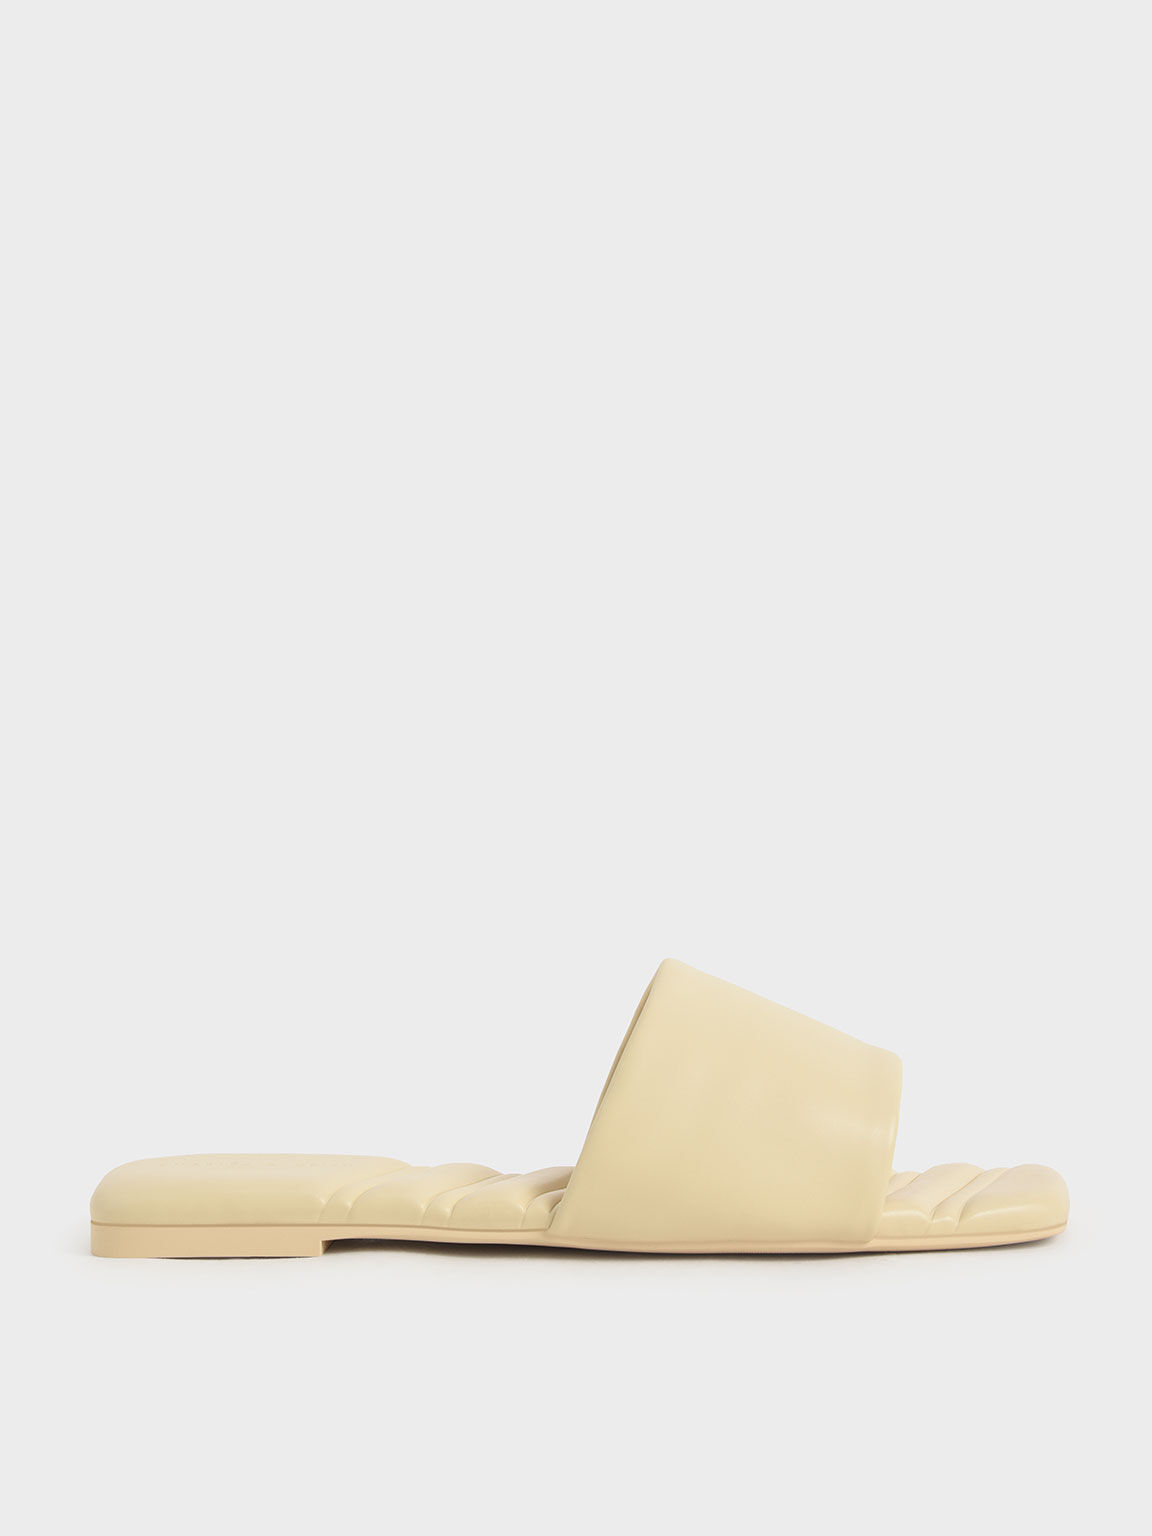 yellow slide sandals